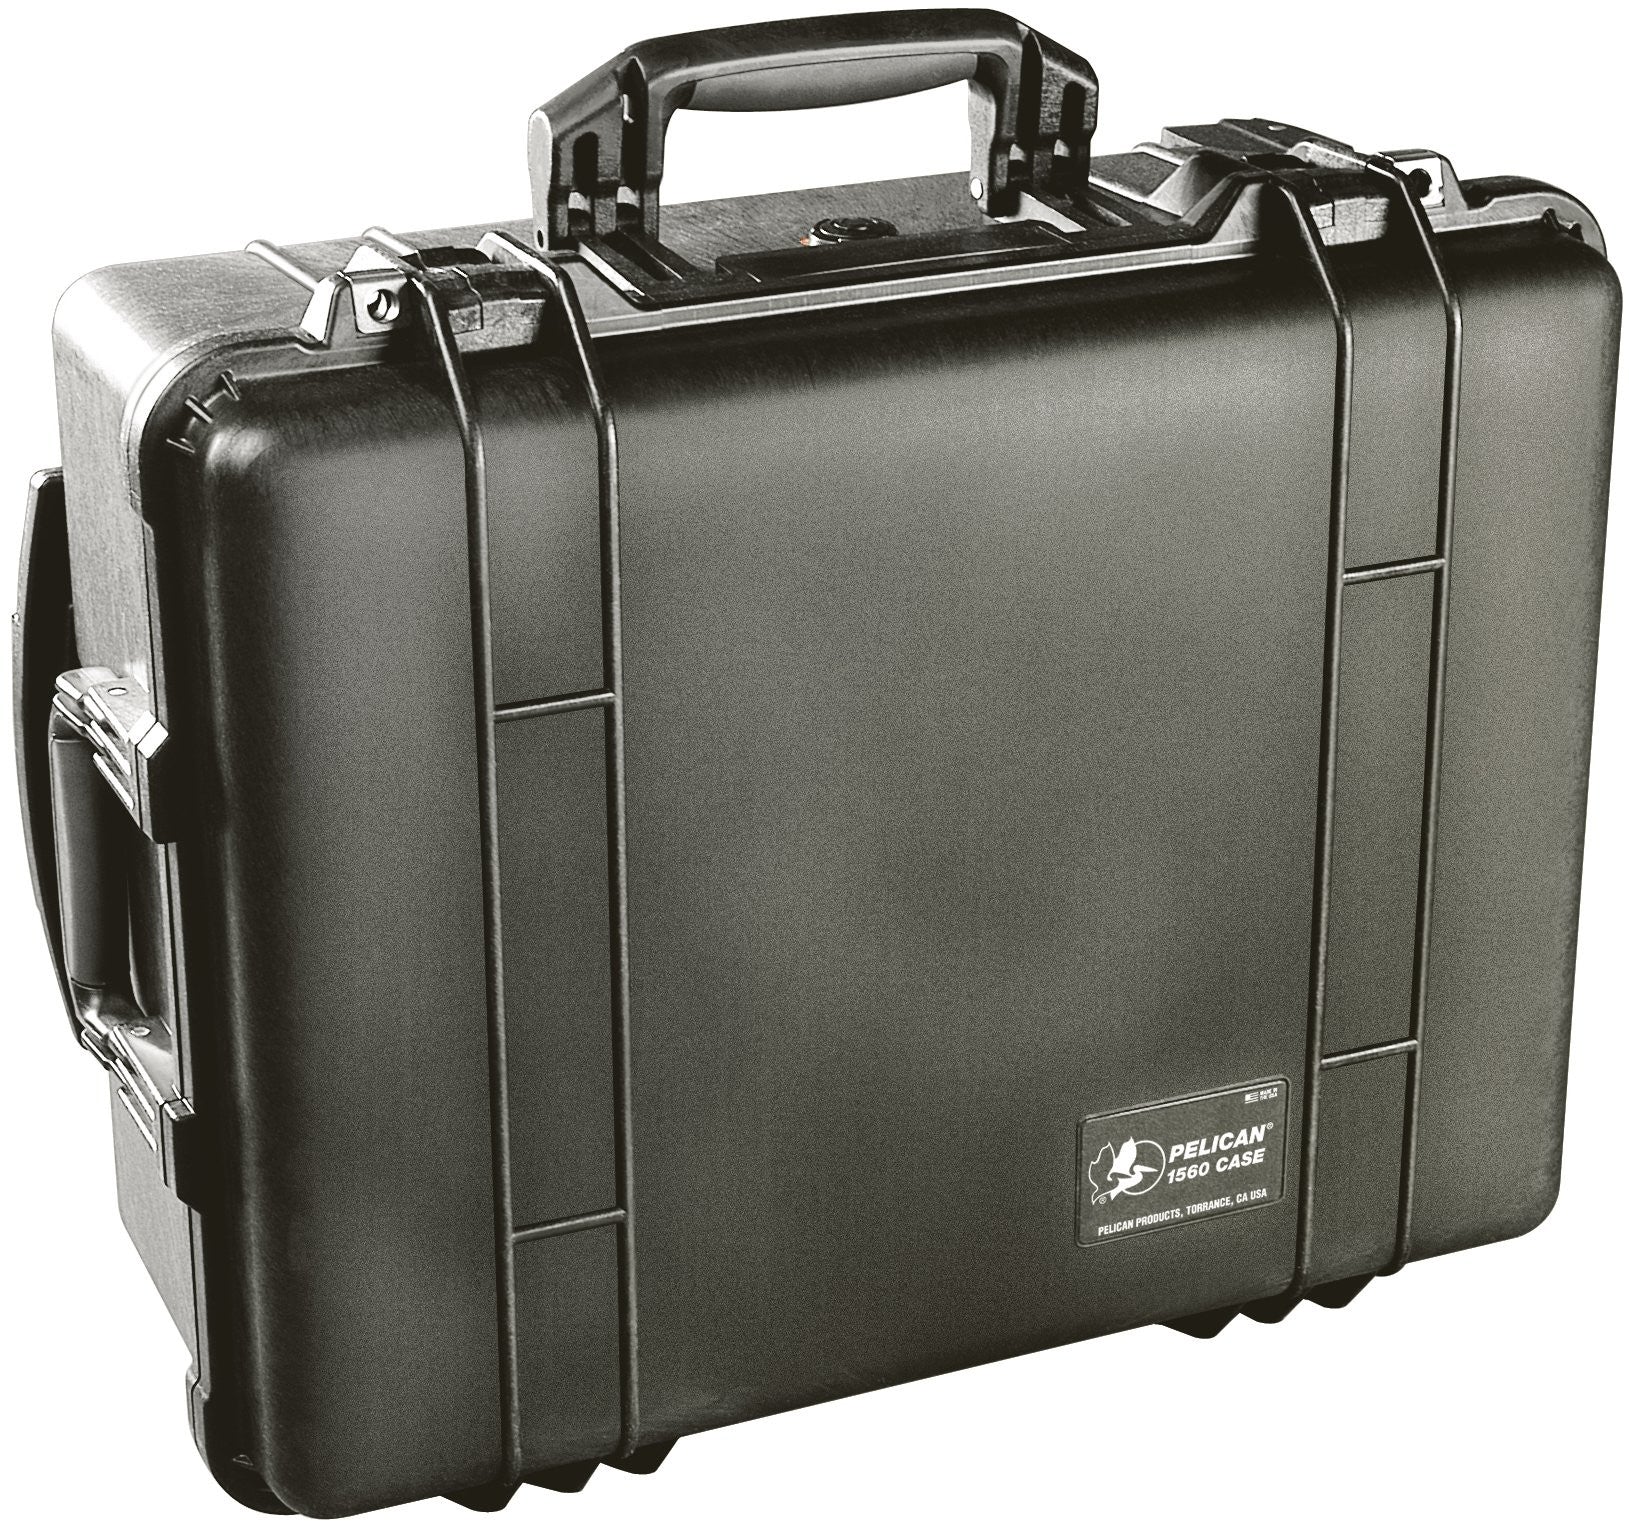 Pelican 1560 Case Black / Foam, bags hard cases, Pelican - Pictureline  - 1